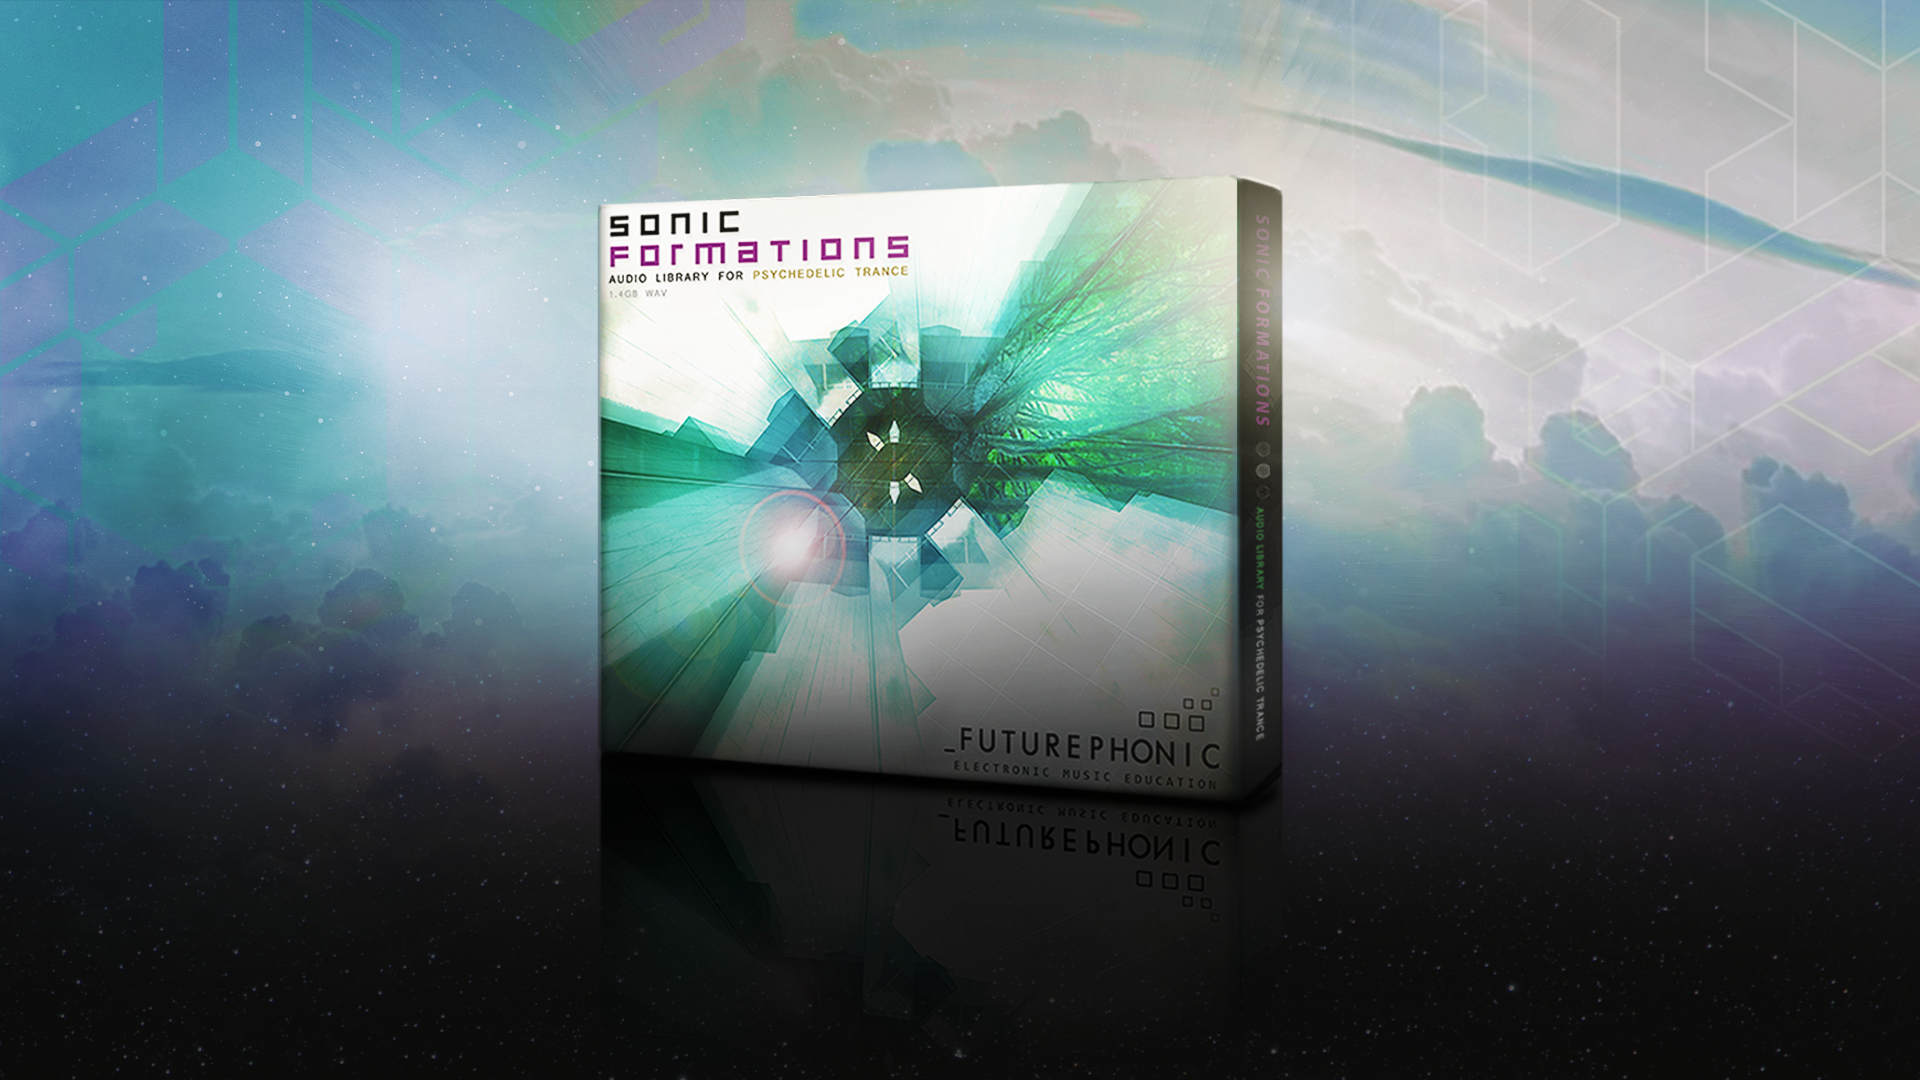 Sonic Formations - Futurephonic